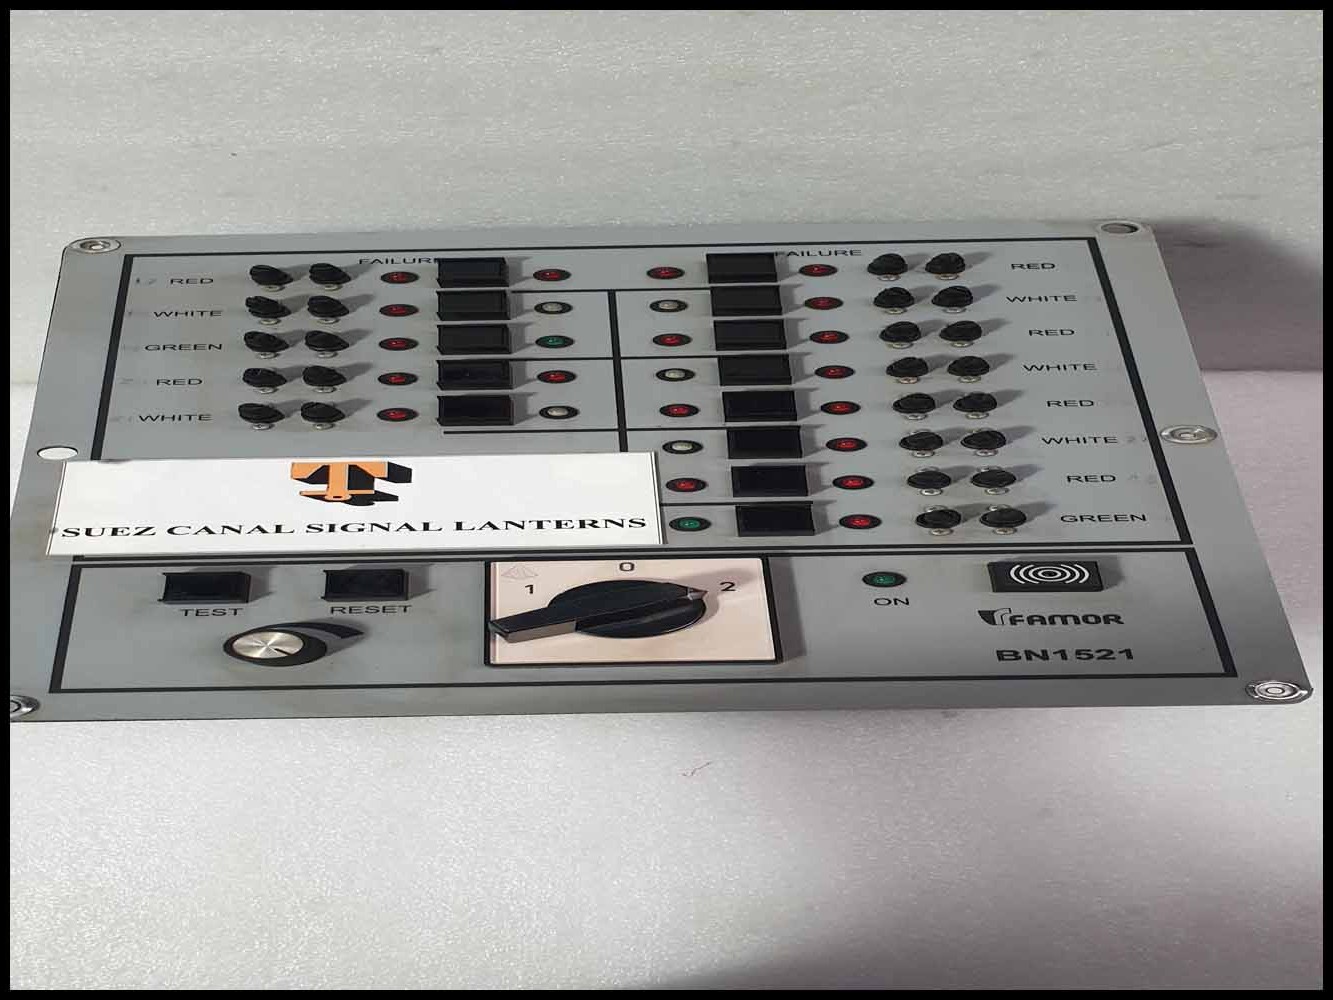 Famor bn1521 control panels